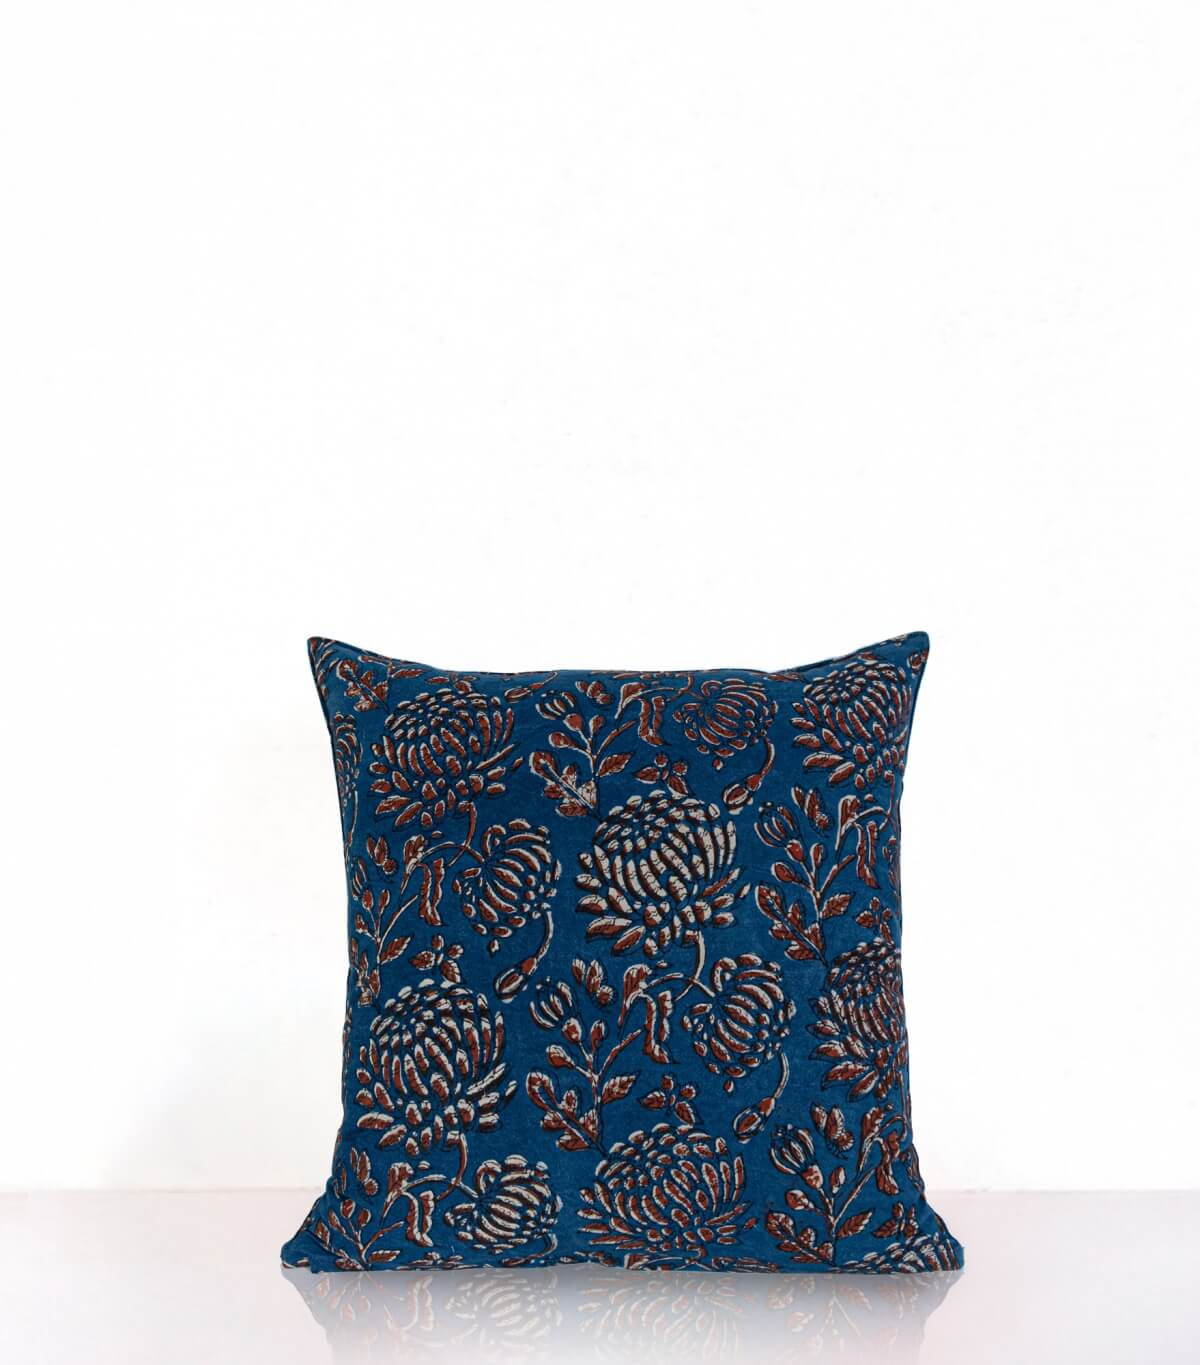 Hand-block printed cushion cover in indigo cotton - Tanna